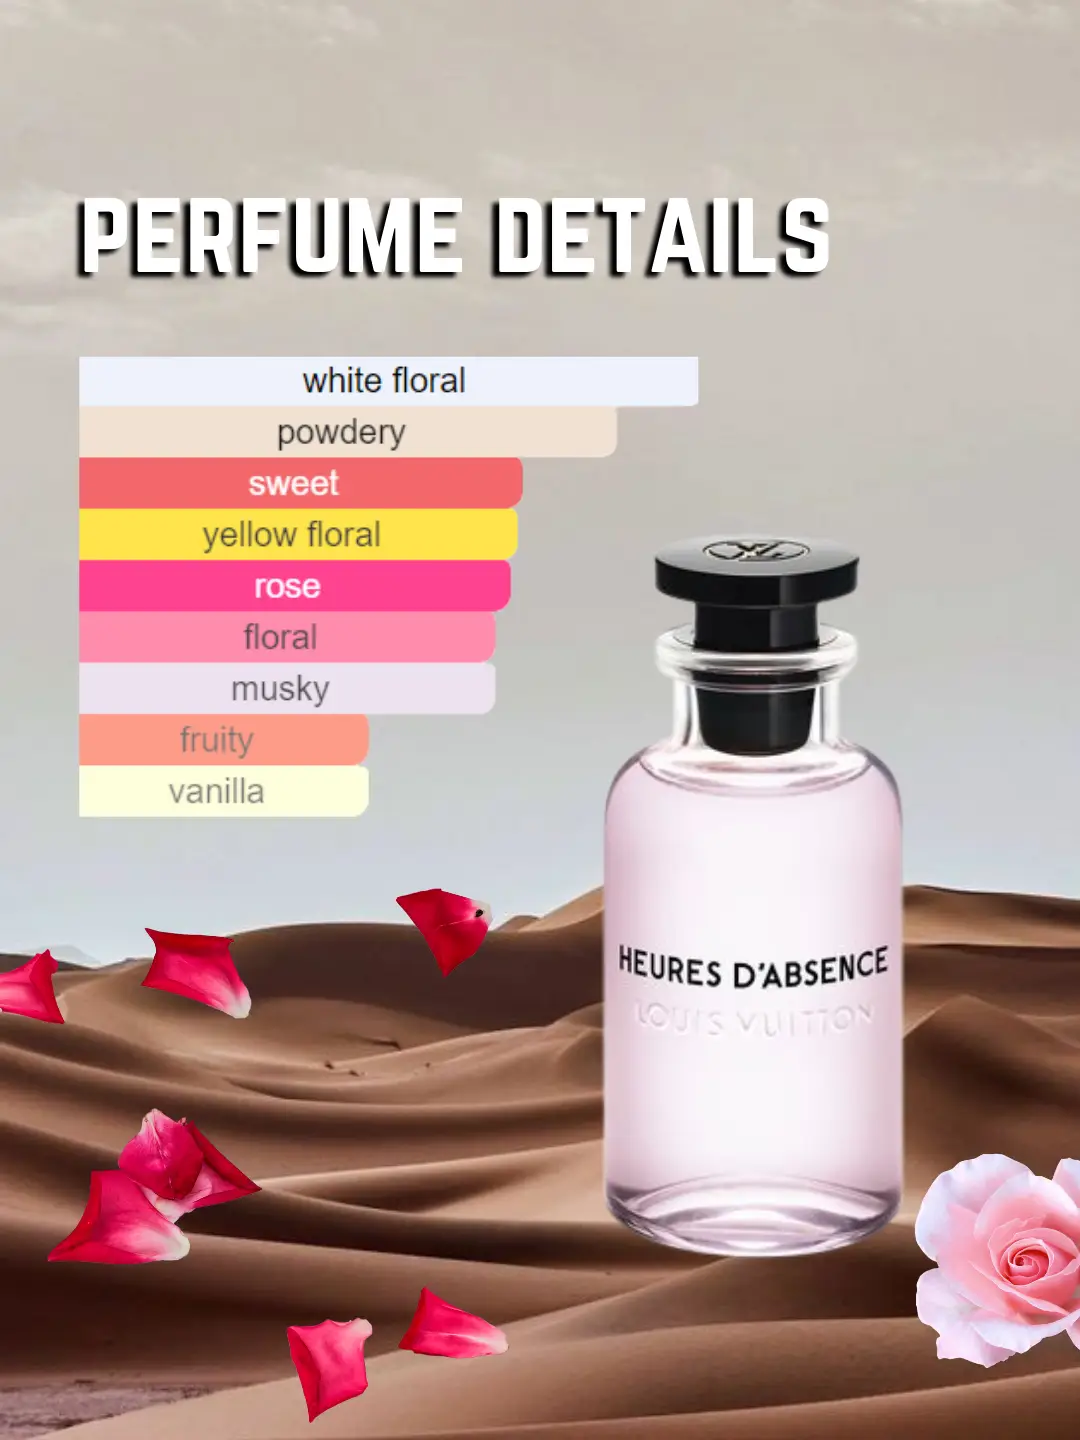 ATTRAPE REVES Louis Vuitton ReviewBest Louis Vuitton Perfume? 